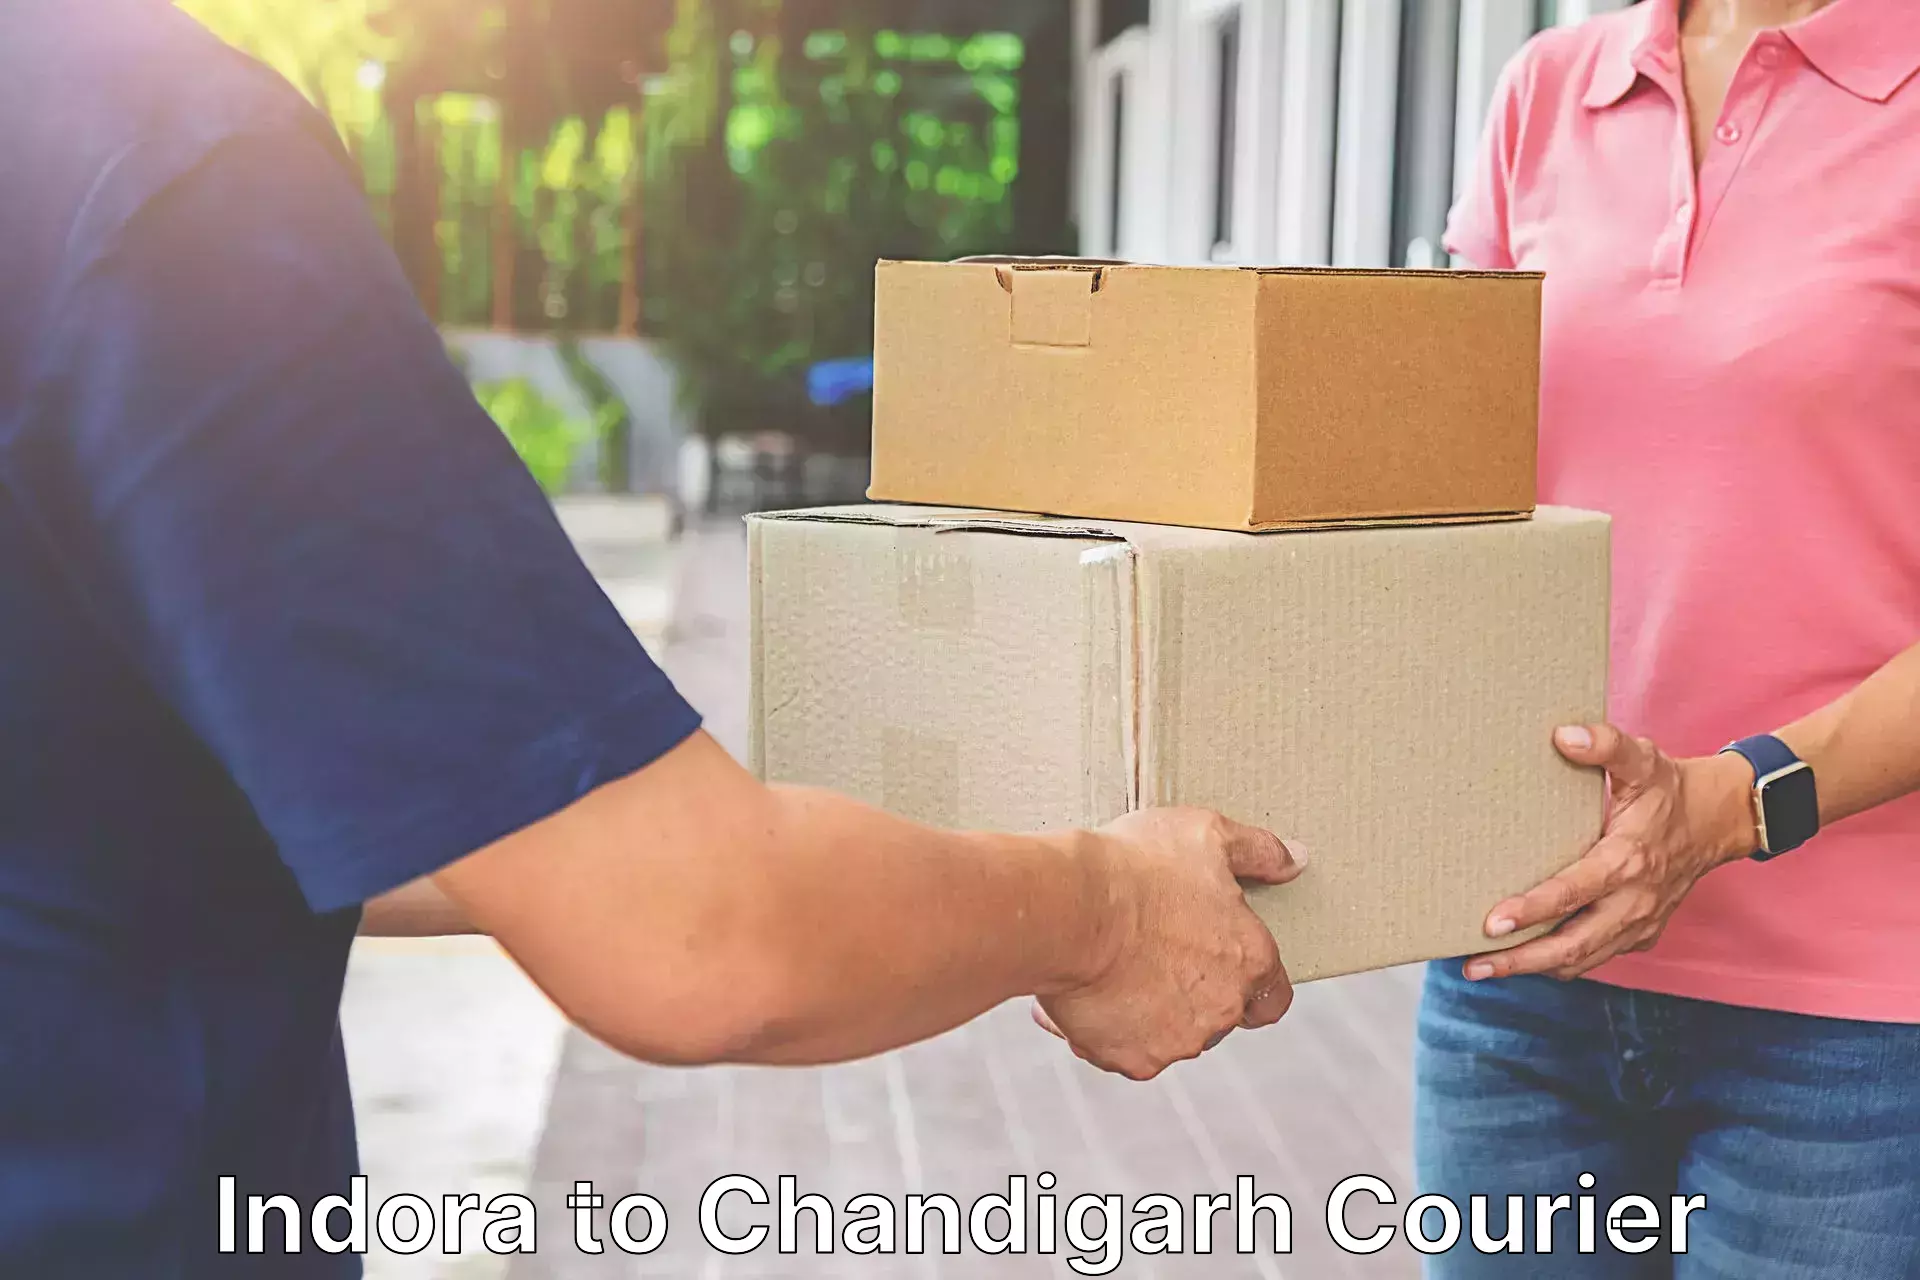 Global logistics network Indora to Chandigarh